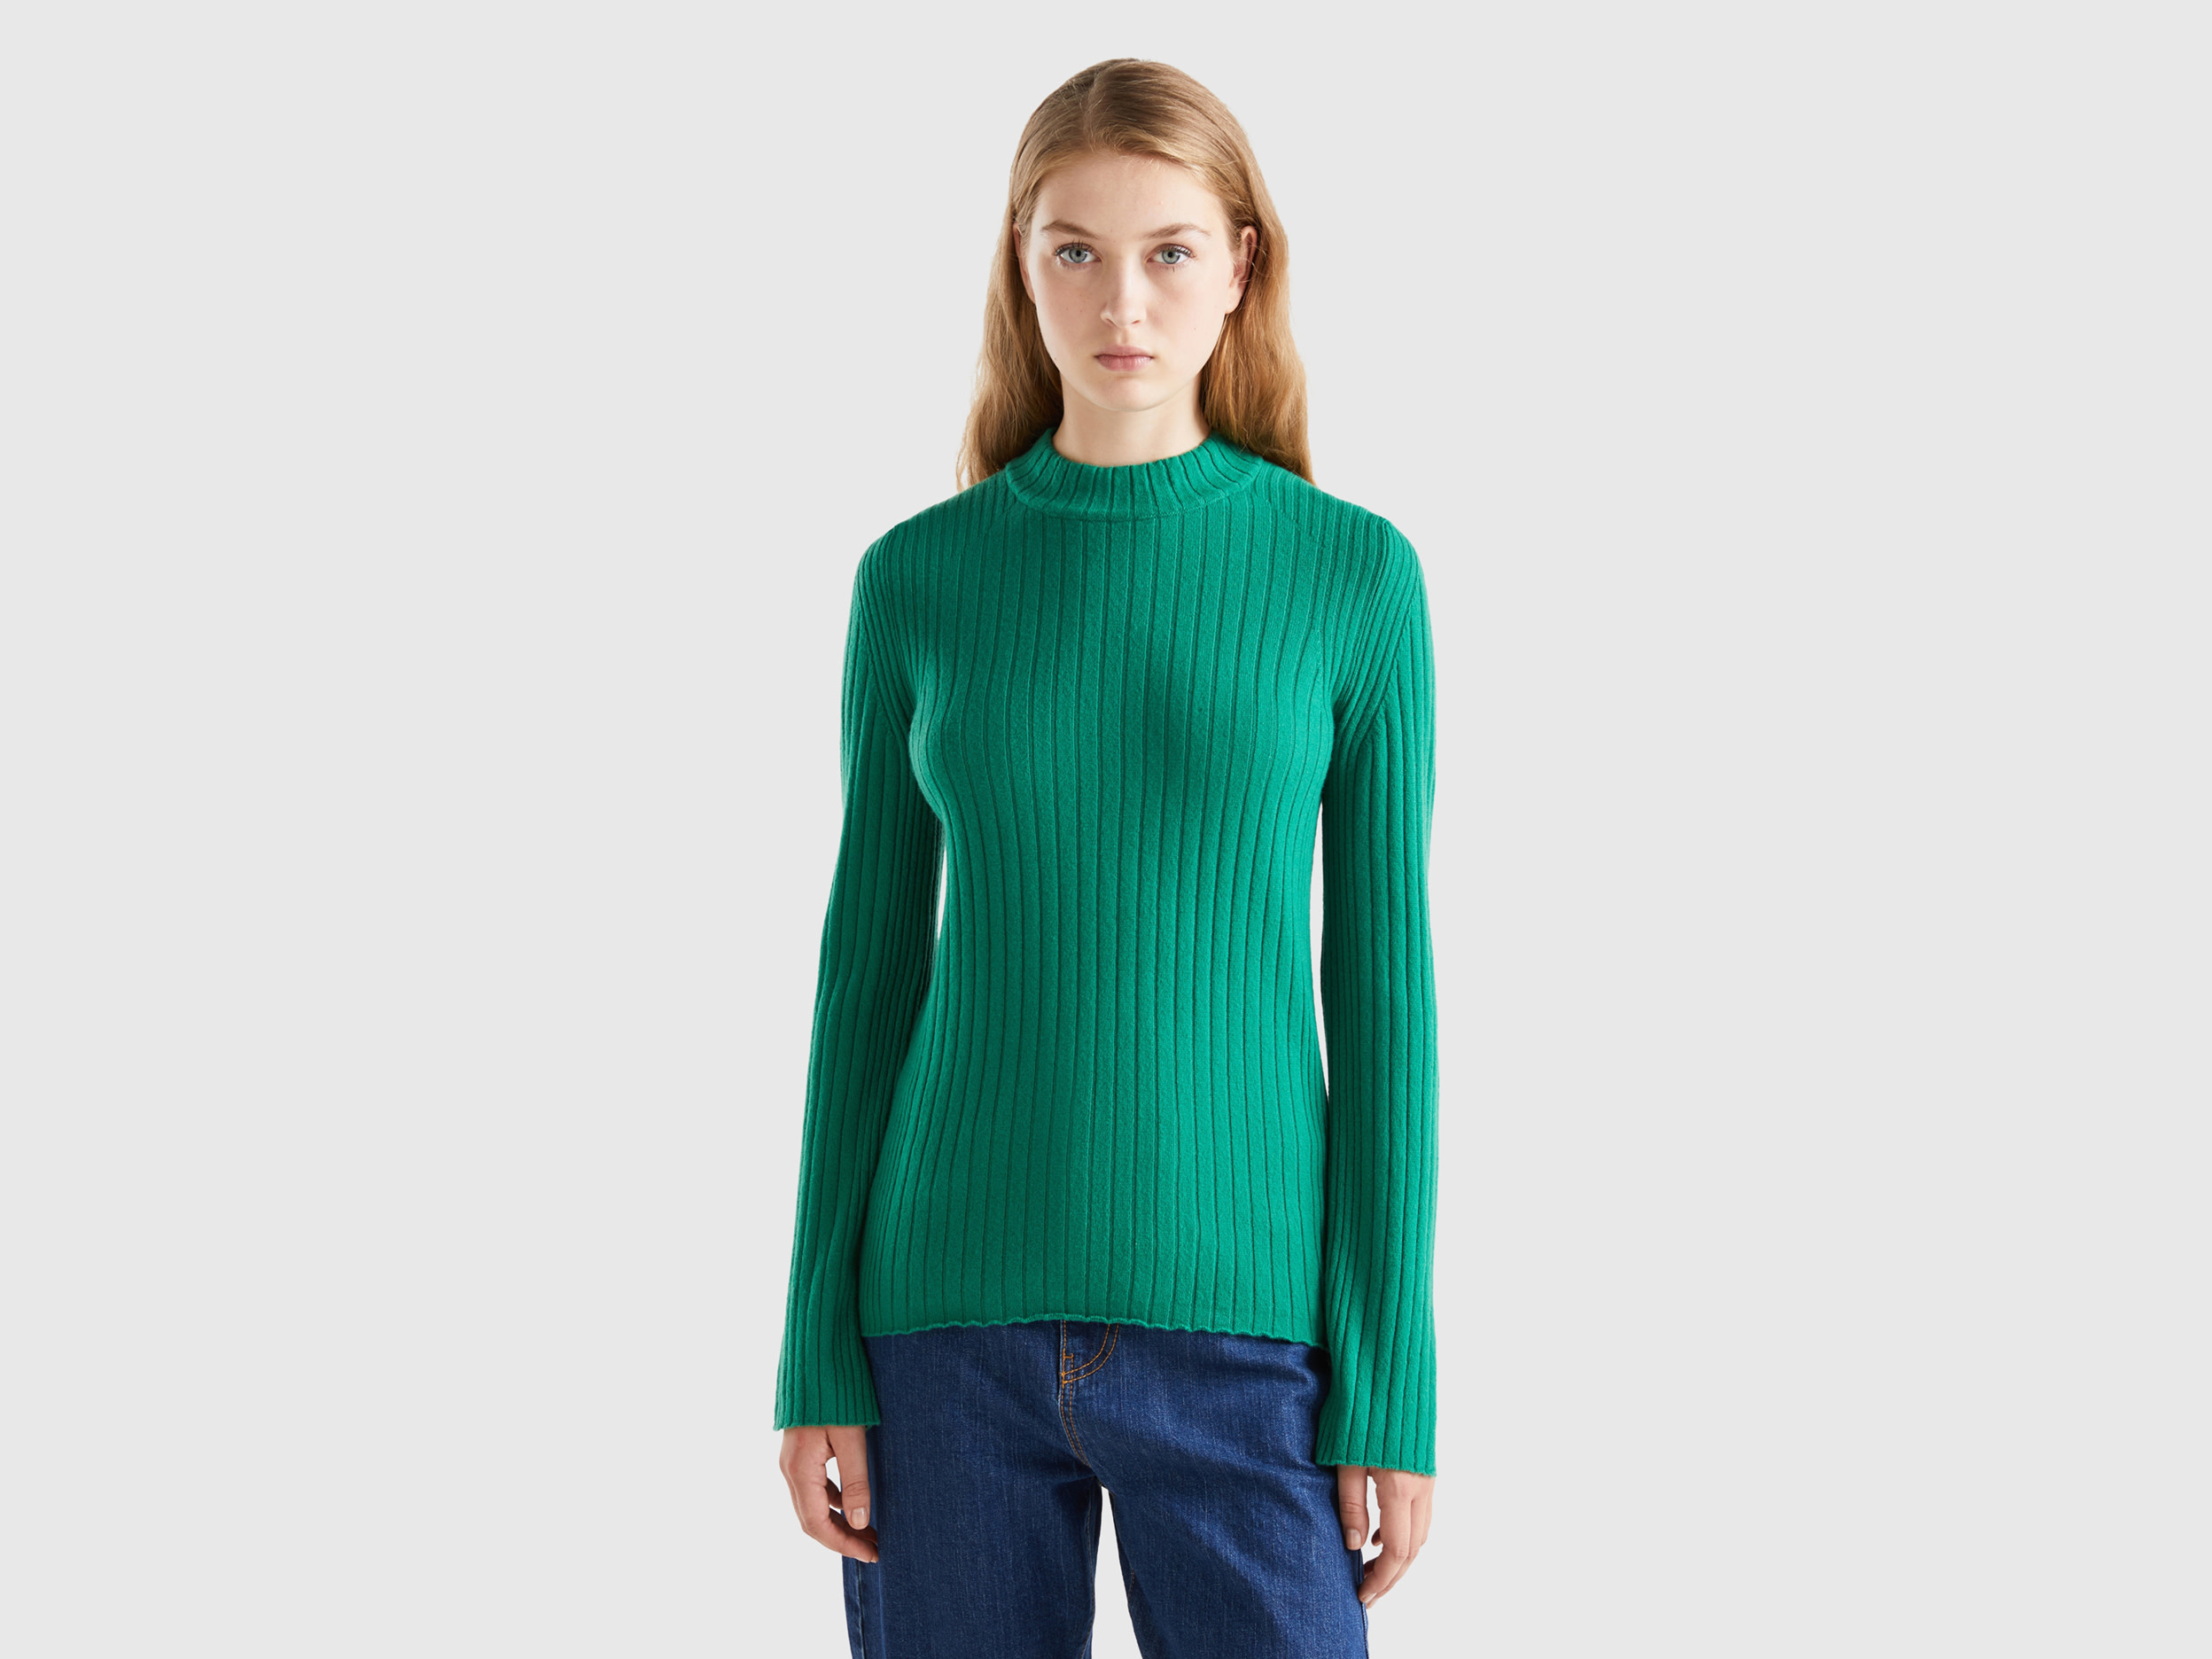 Benetton, Turtleneck Sweater With Slits, size M, Green, Women